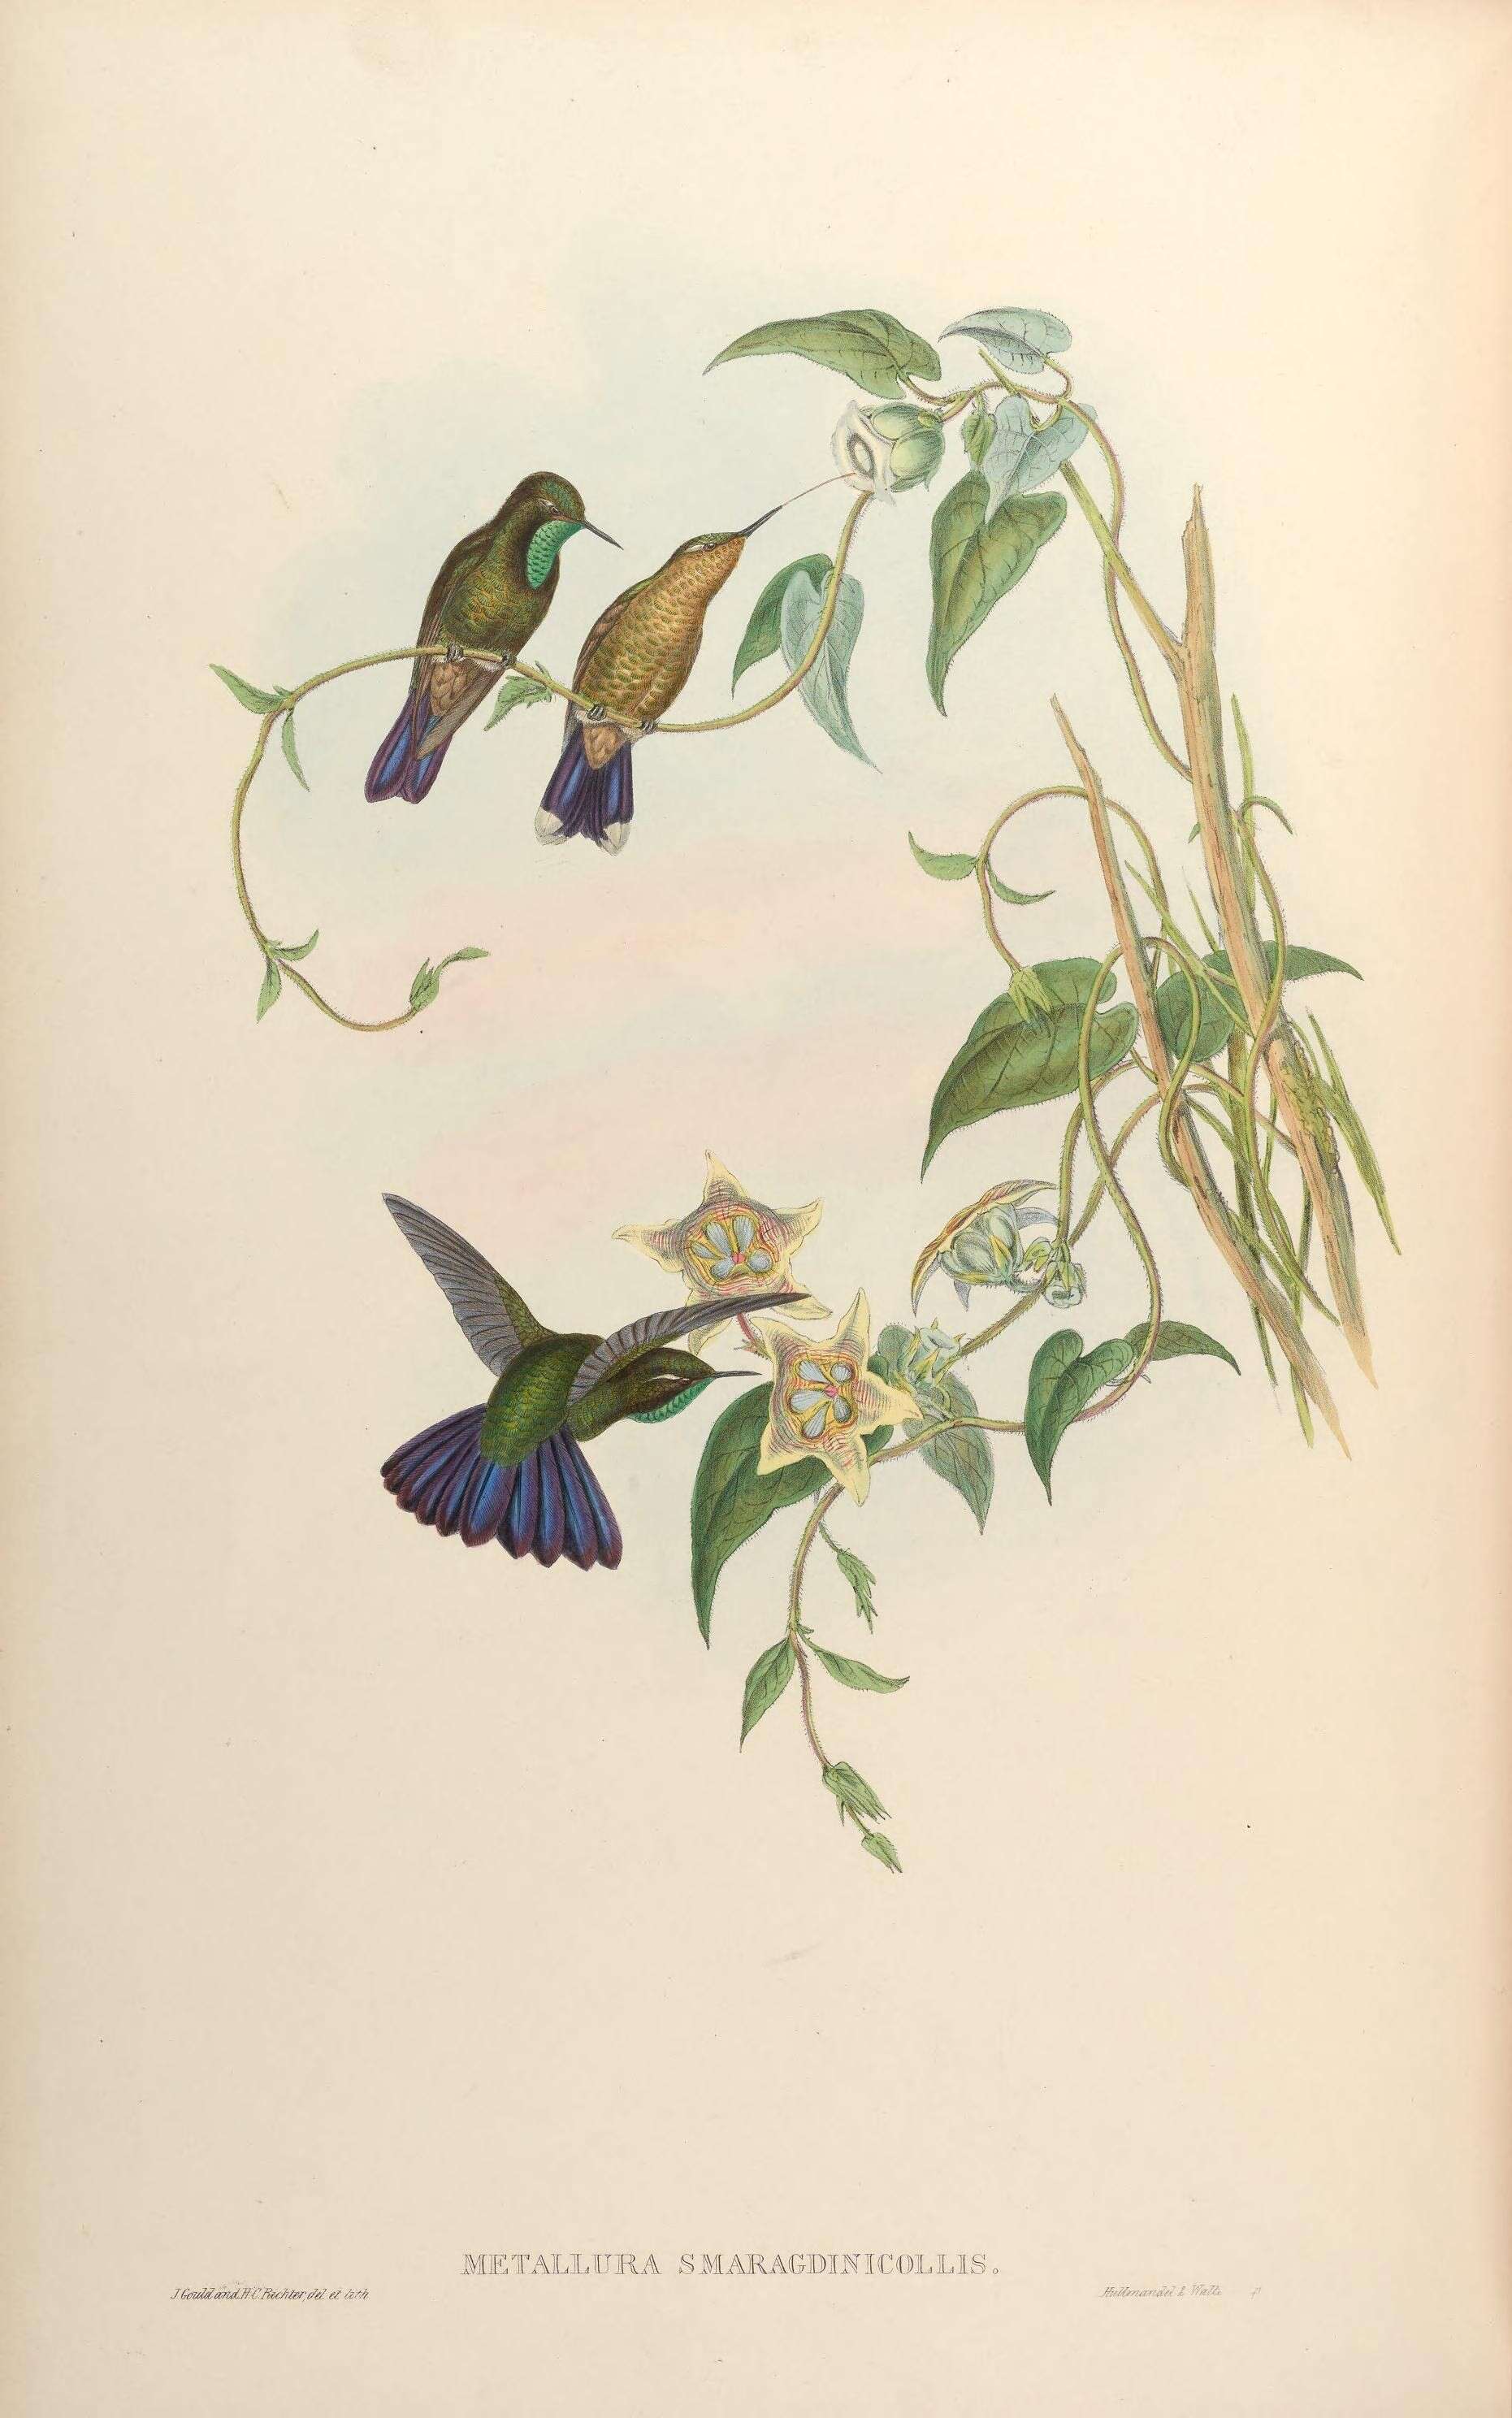 Image of Metallura Gould 1847